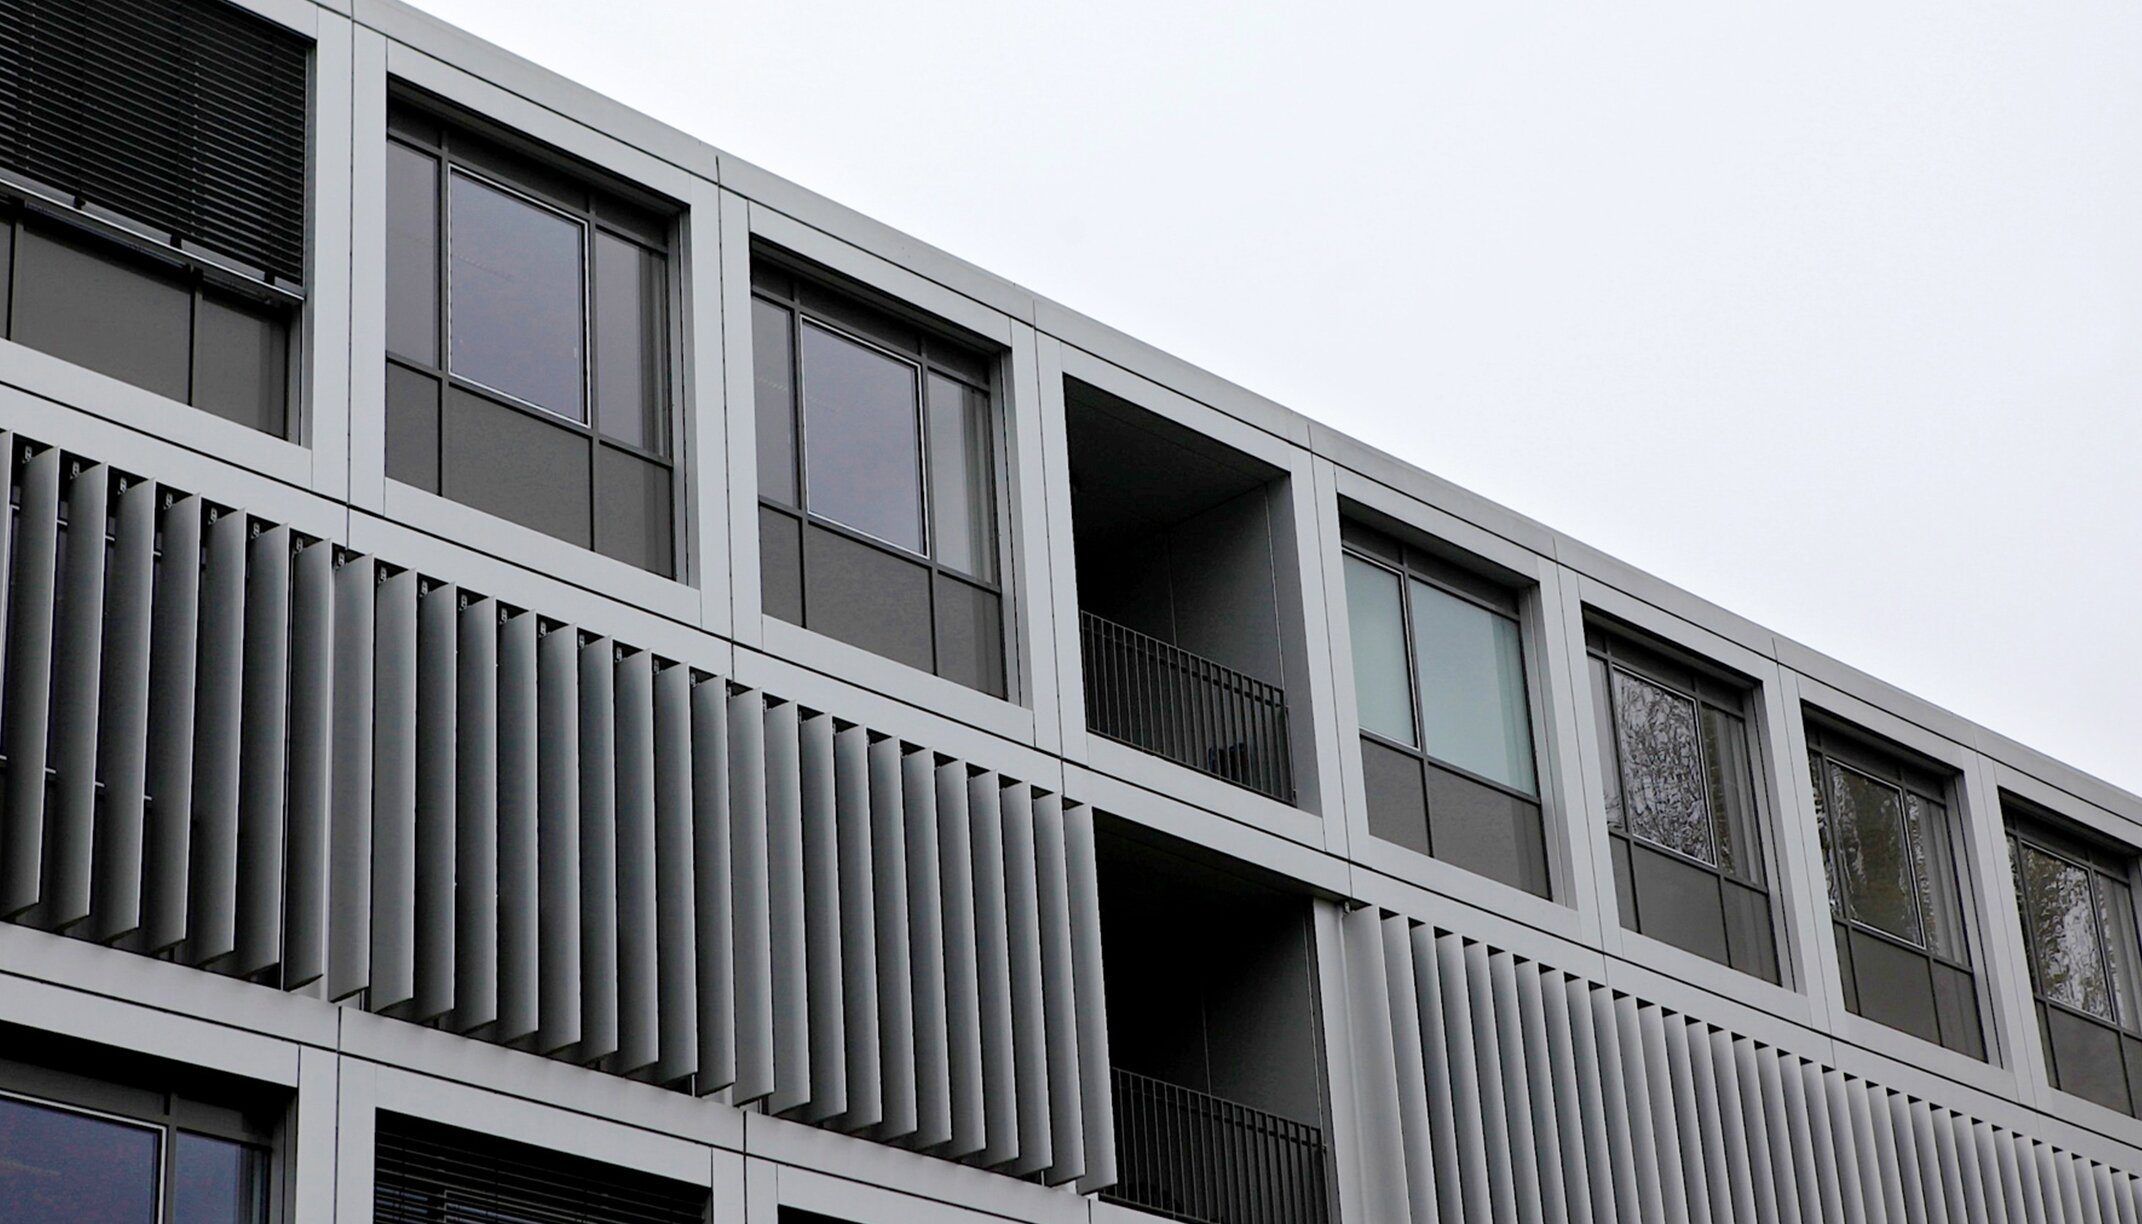 "Technische Universität Darmstadt" back ventilated rainscreen facade, aluminium